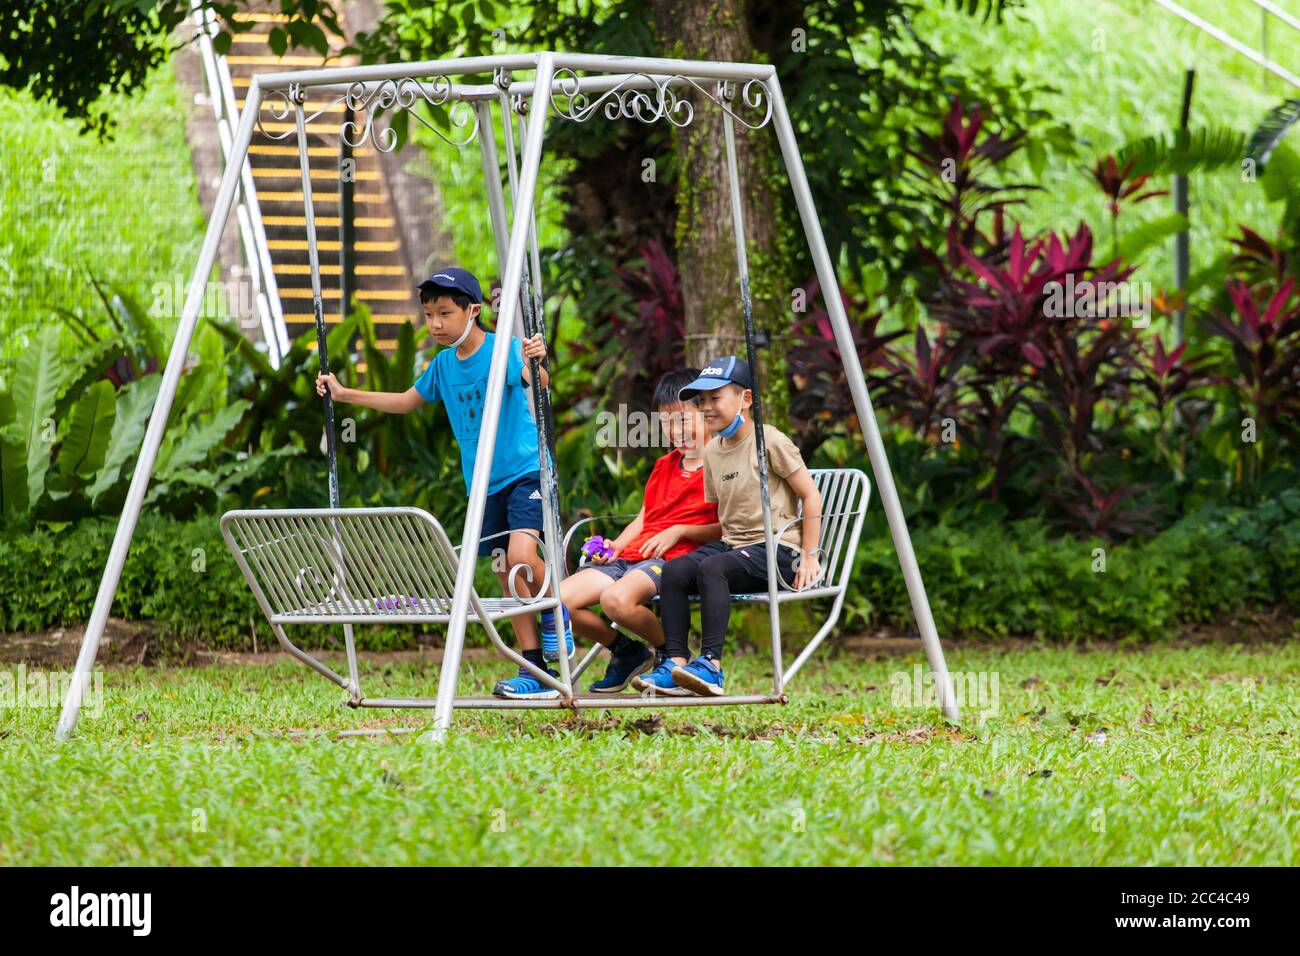 Three Japanese boys on swing at outdoor greenery venue Stock Photo